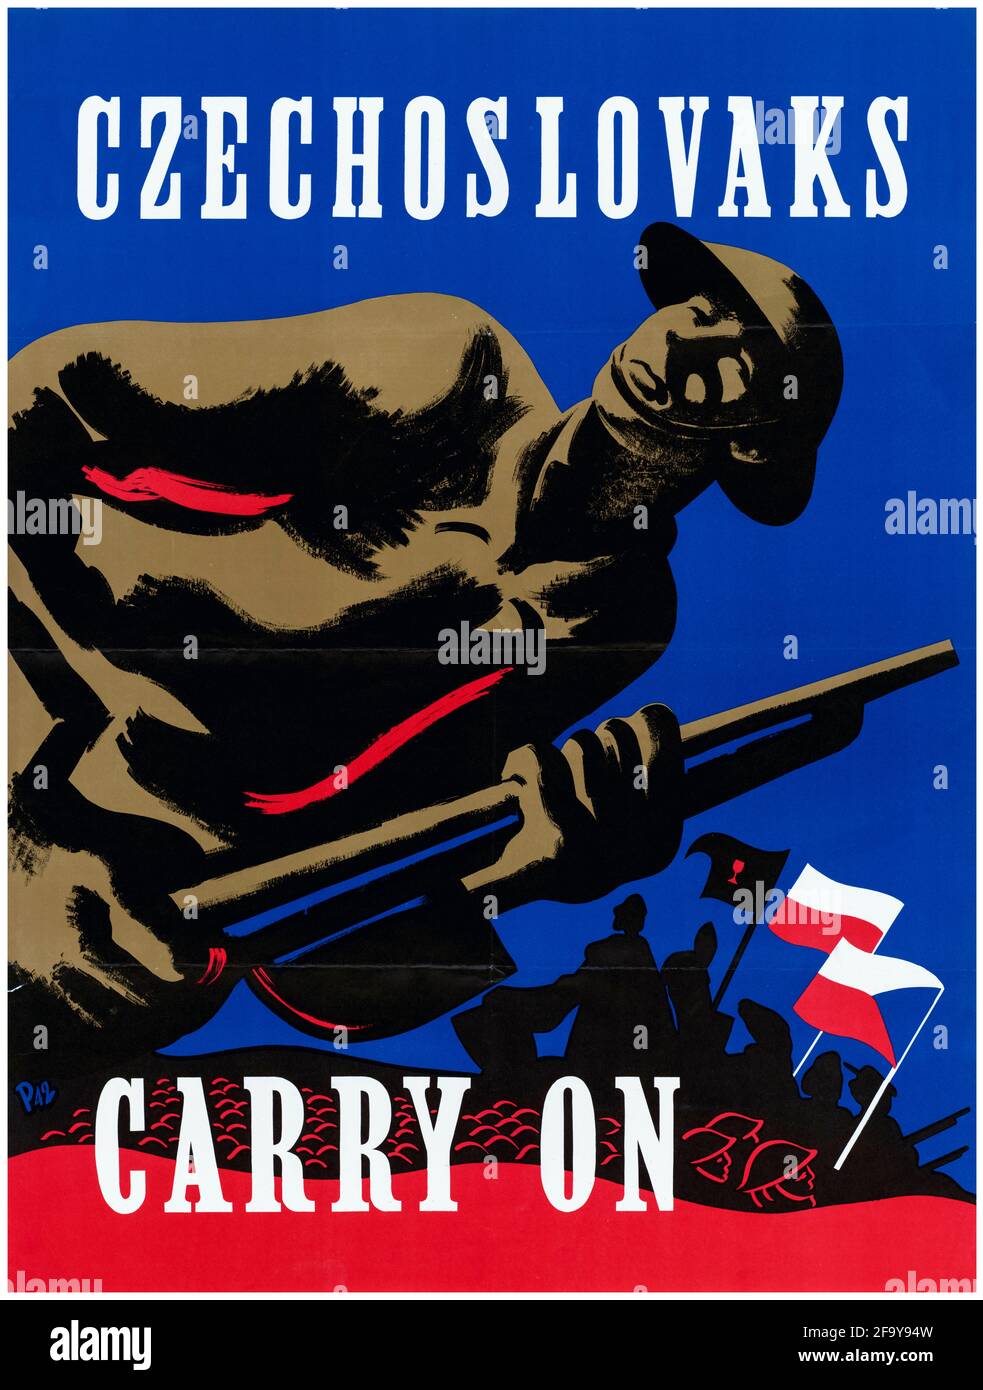 Czechoslovakia, WW2 motivational poster, Czechoslovaks Carry On (Czech Soldier and flag), 1942-1945 Stock Photo